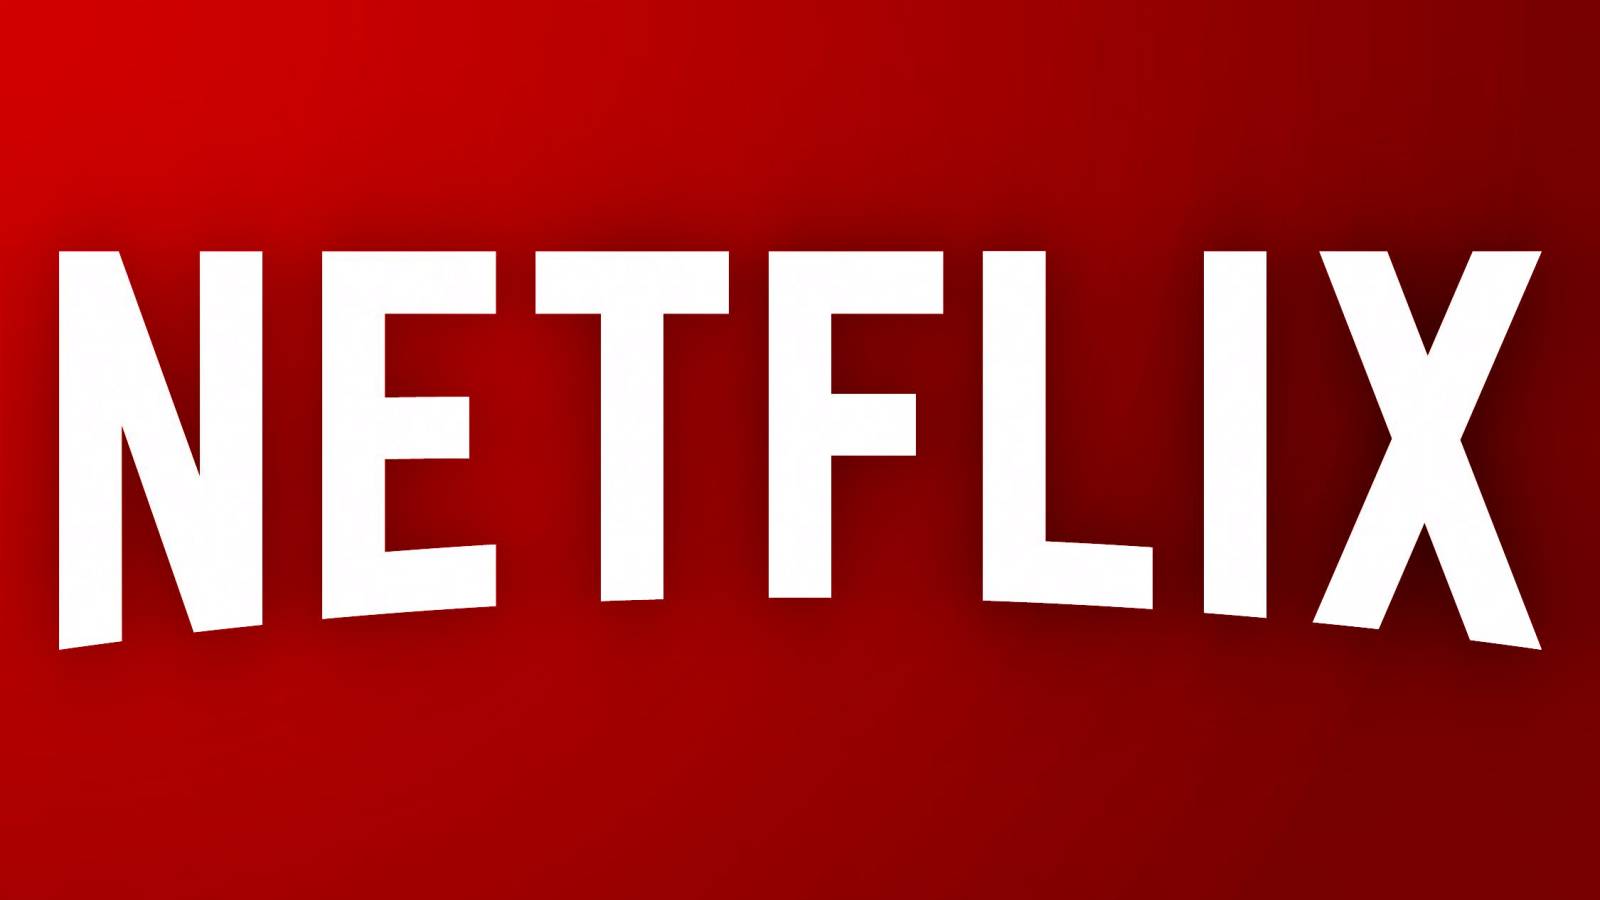 Netflix Anunta Masuri RADICALE Surprins Multa Lume Planurile Companiei